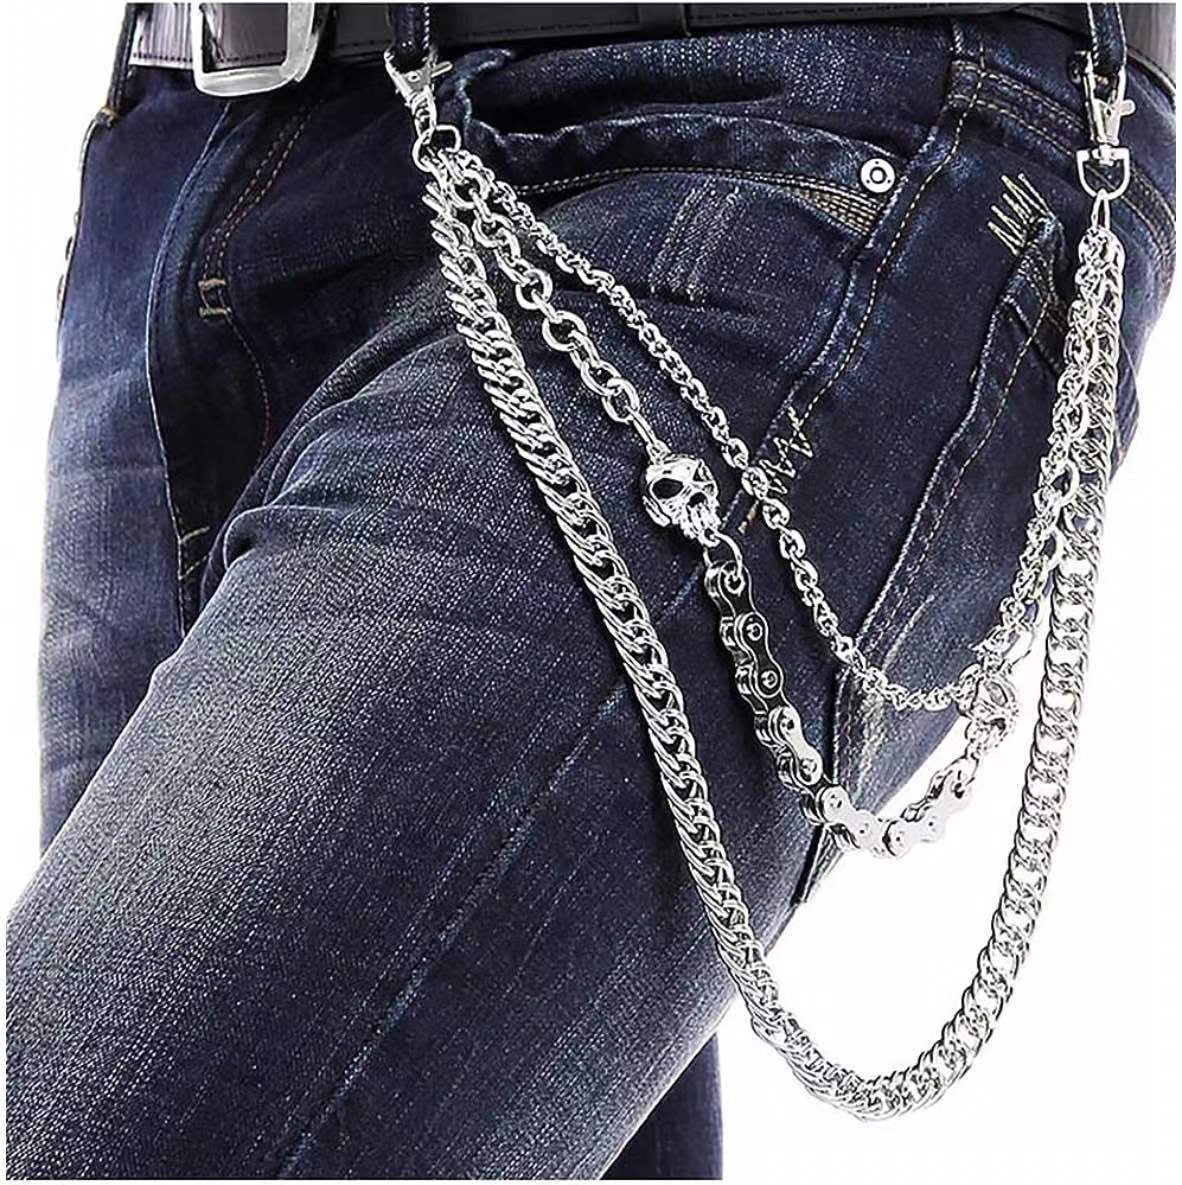 PHOGARY 3 Pieces Jeans Chains Wallet Chain Pants Chain Pocket Chain Hip Hop  Rock Chains Belt Chain Biker Trouser Chain